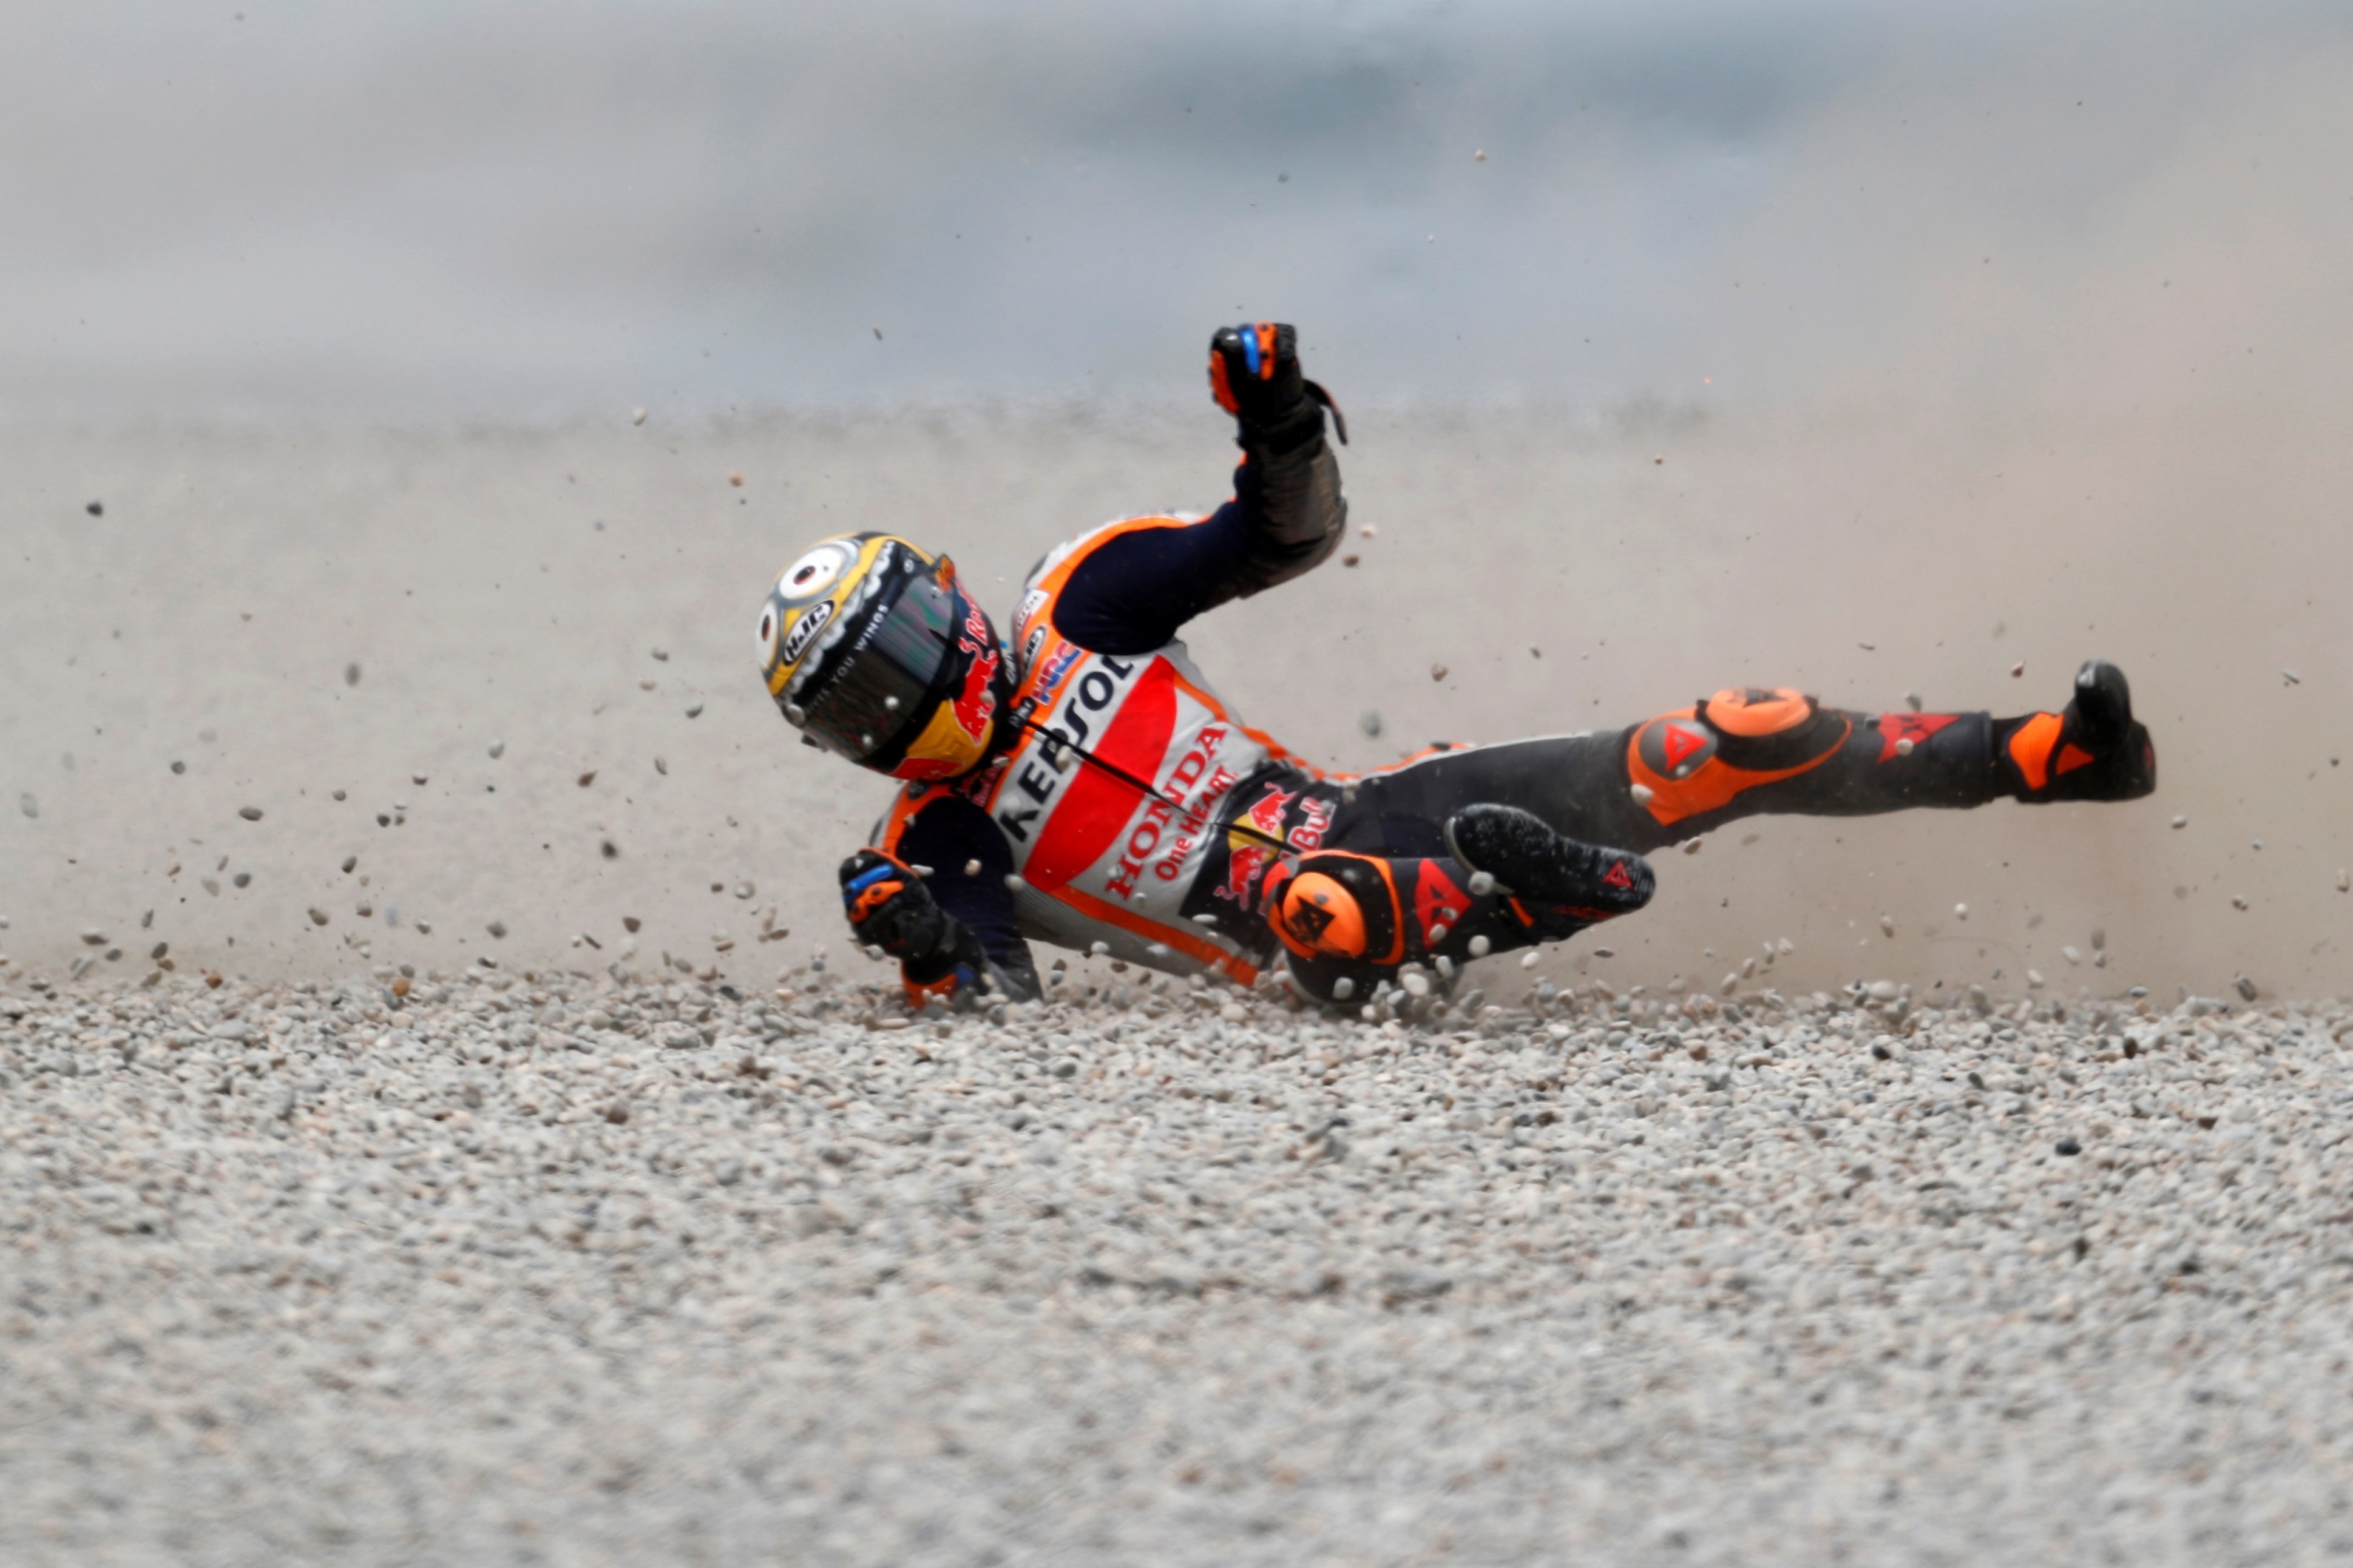 Estremecedora caída de Pol Espargaró a dos días de empezar el Mundial de MotoGP